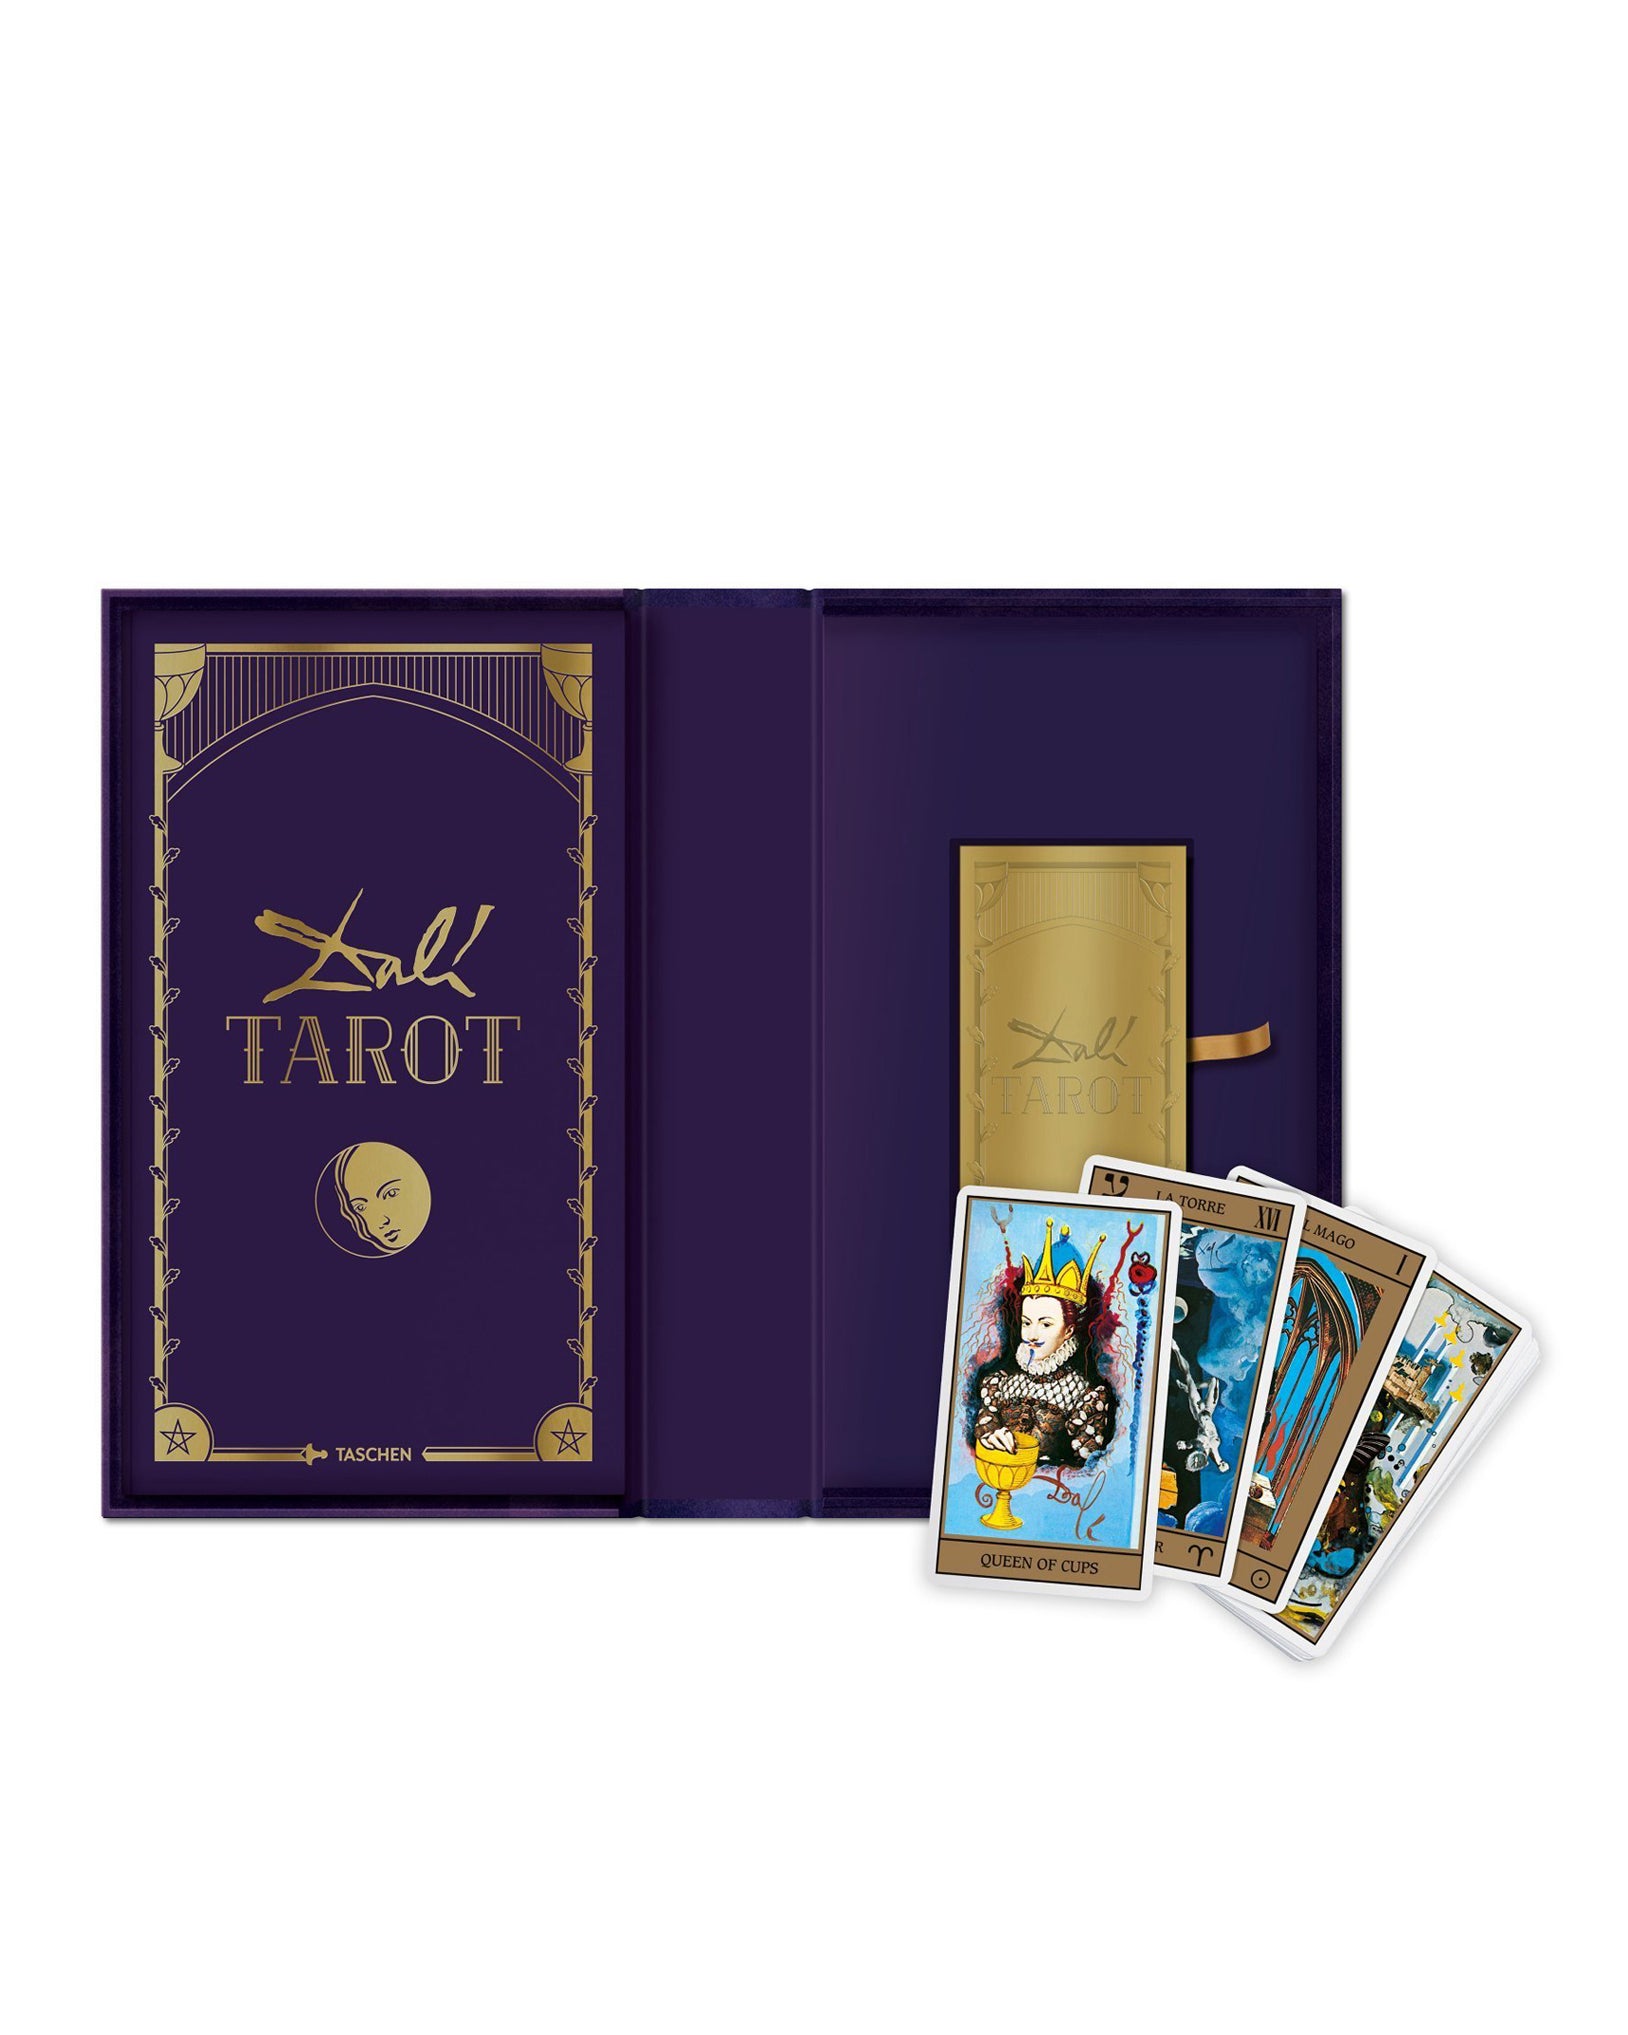 Dalí Tarot Card Set